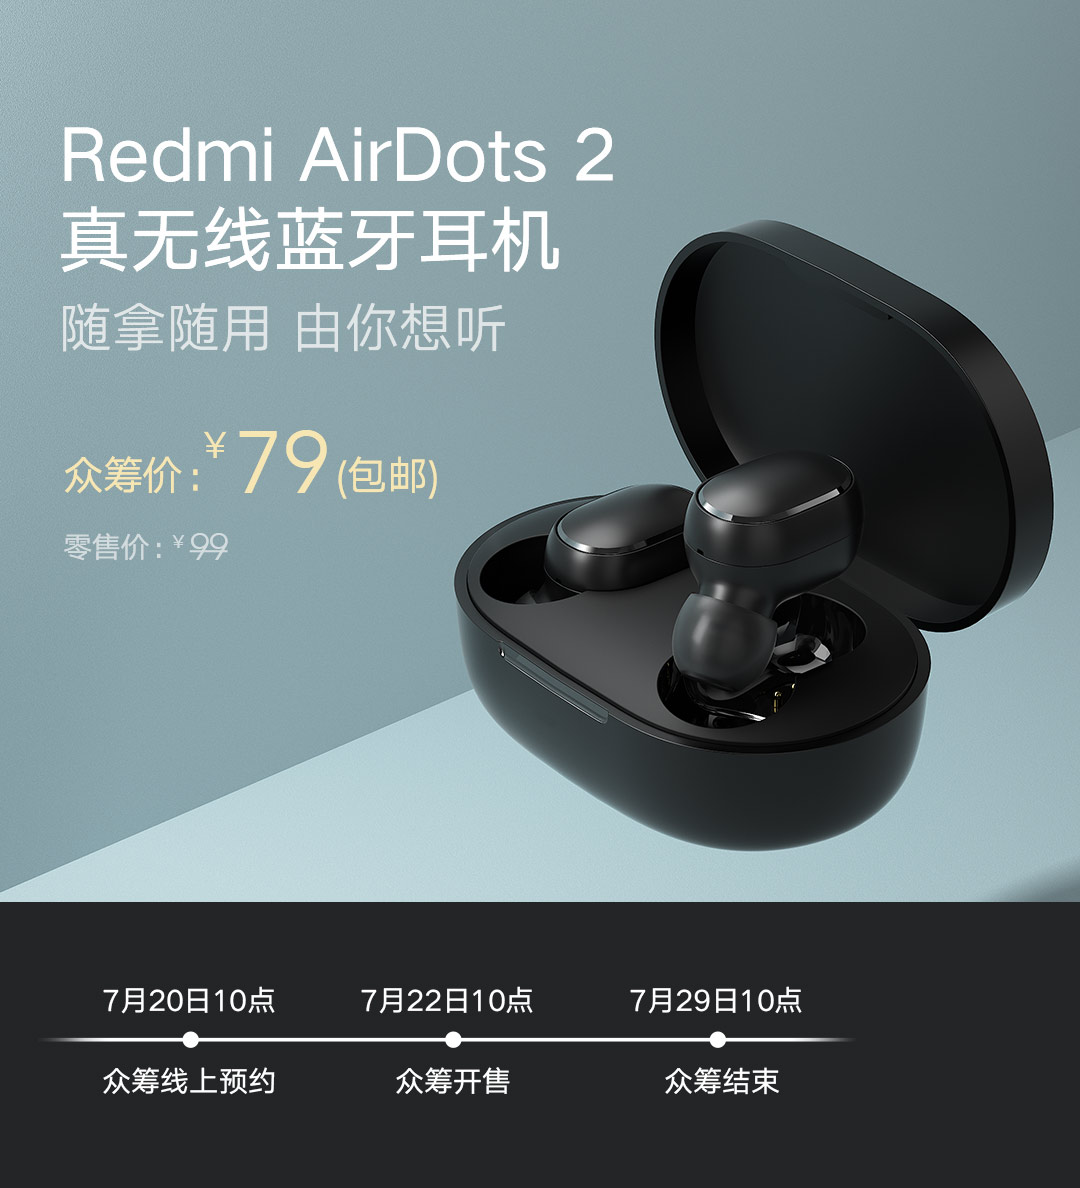 Xiaomi Mi AirDots 2 SE: New Apple AirPods alternatives that cost under  US$25 -  News